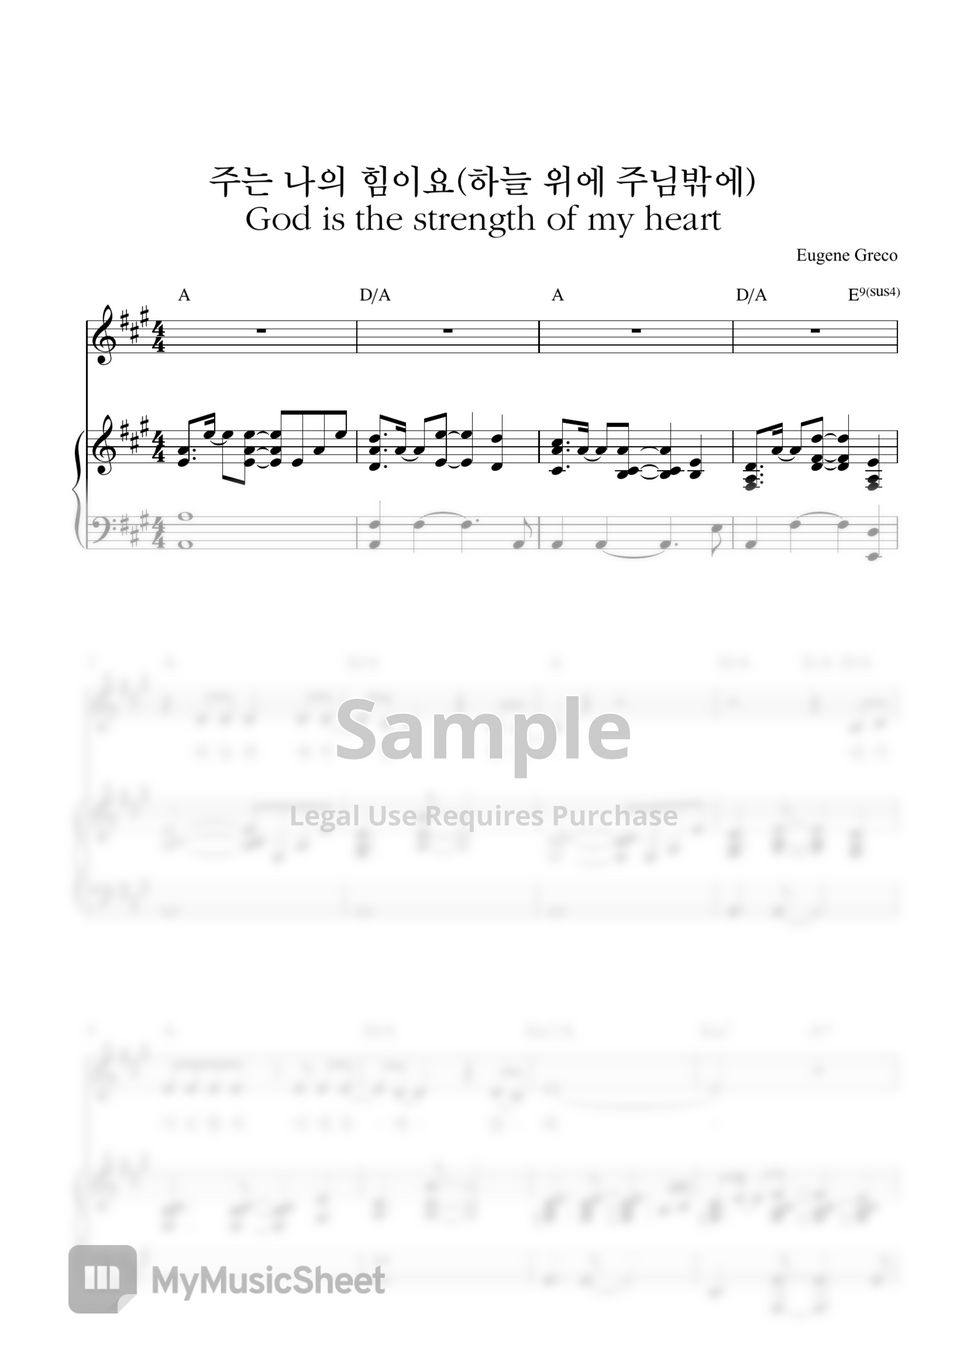 Eugene Greco - 주는 나의 힘이요(하늘 위에 주님 밖에_God is the strength of my heart_A Key) (피아노 3단) by Samuel Park